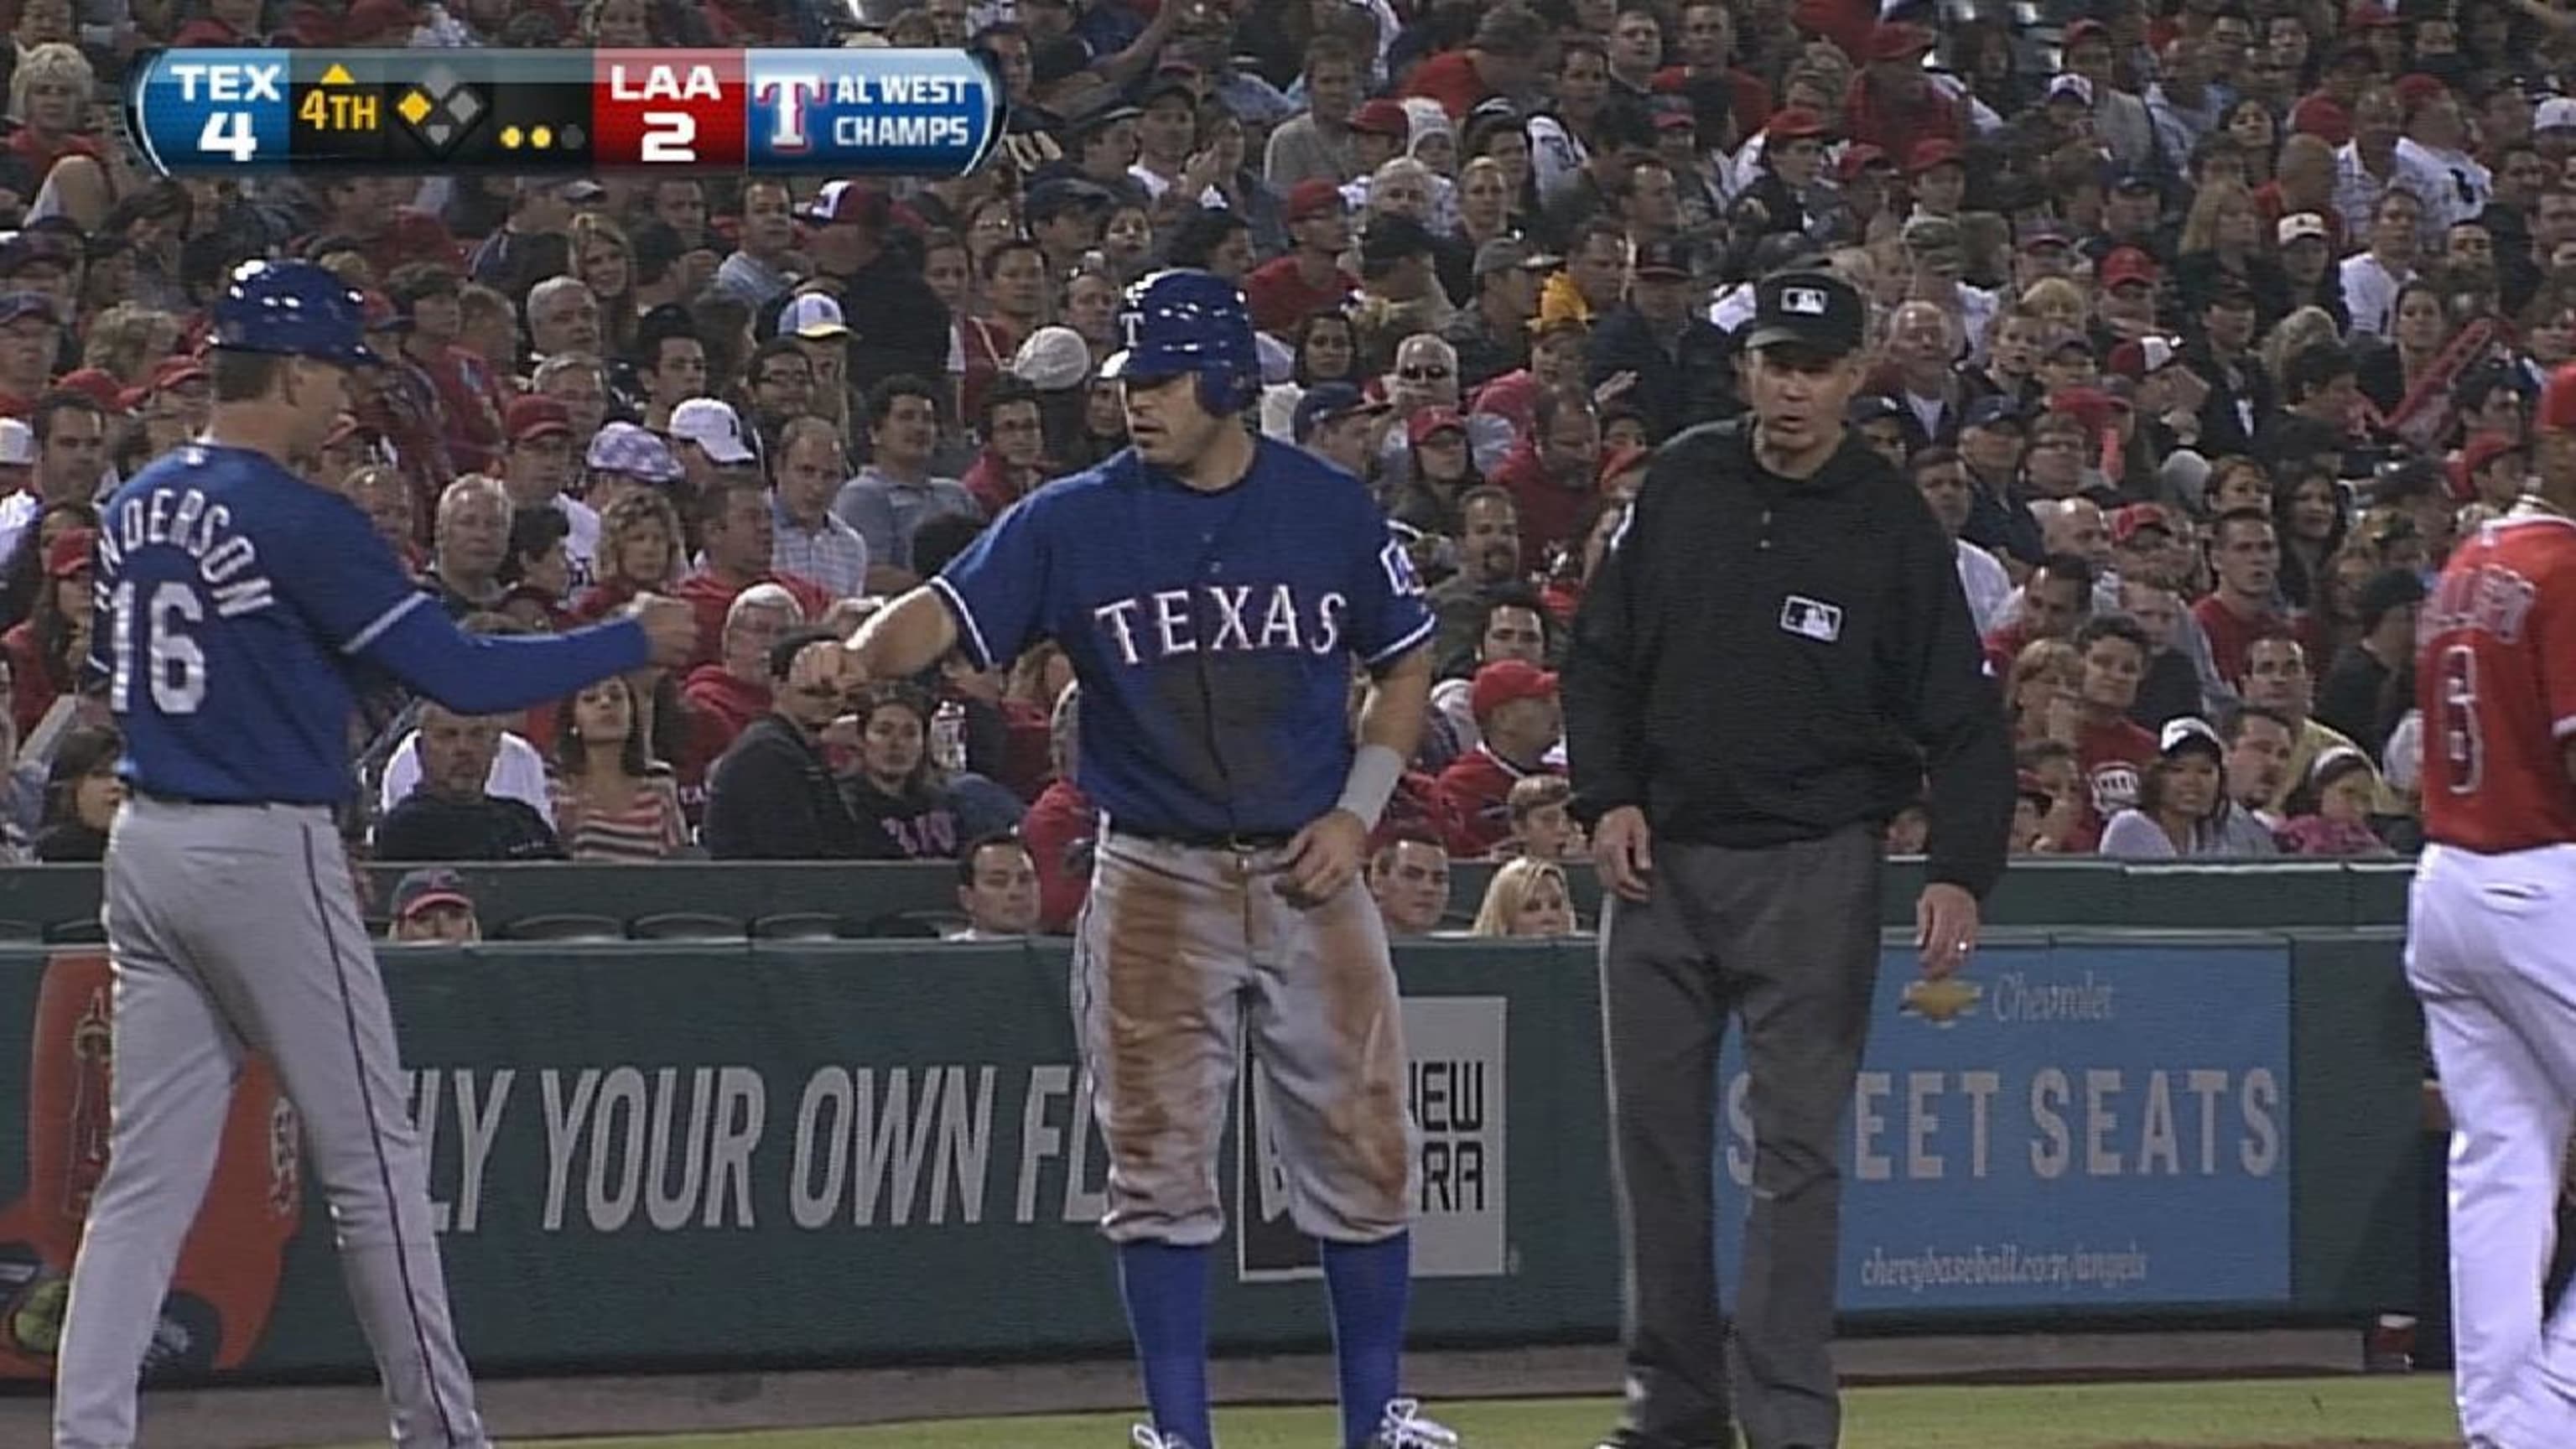 Texas Rangers second baseman Ian Kinsler in action against the Los